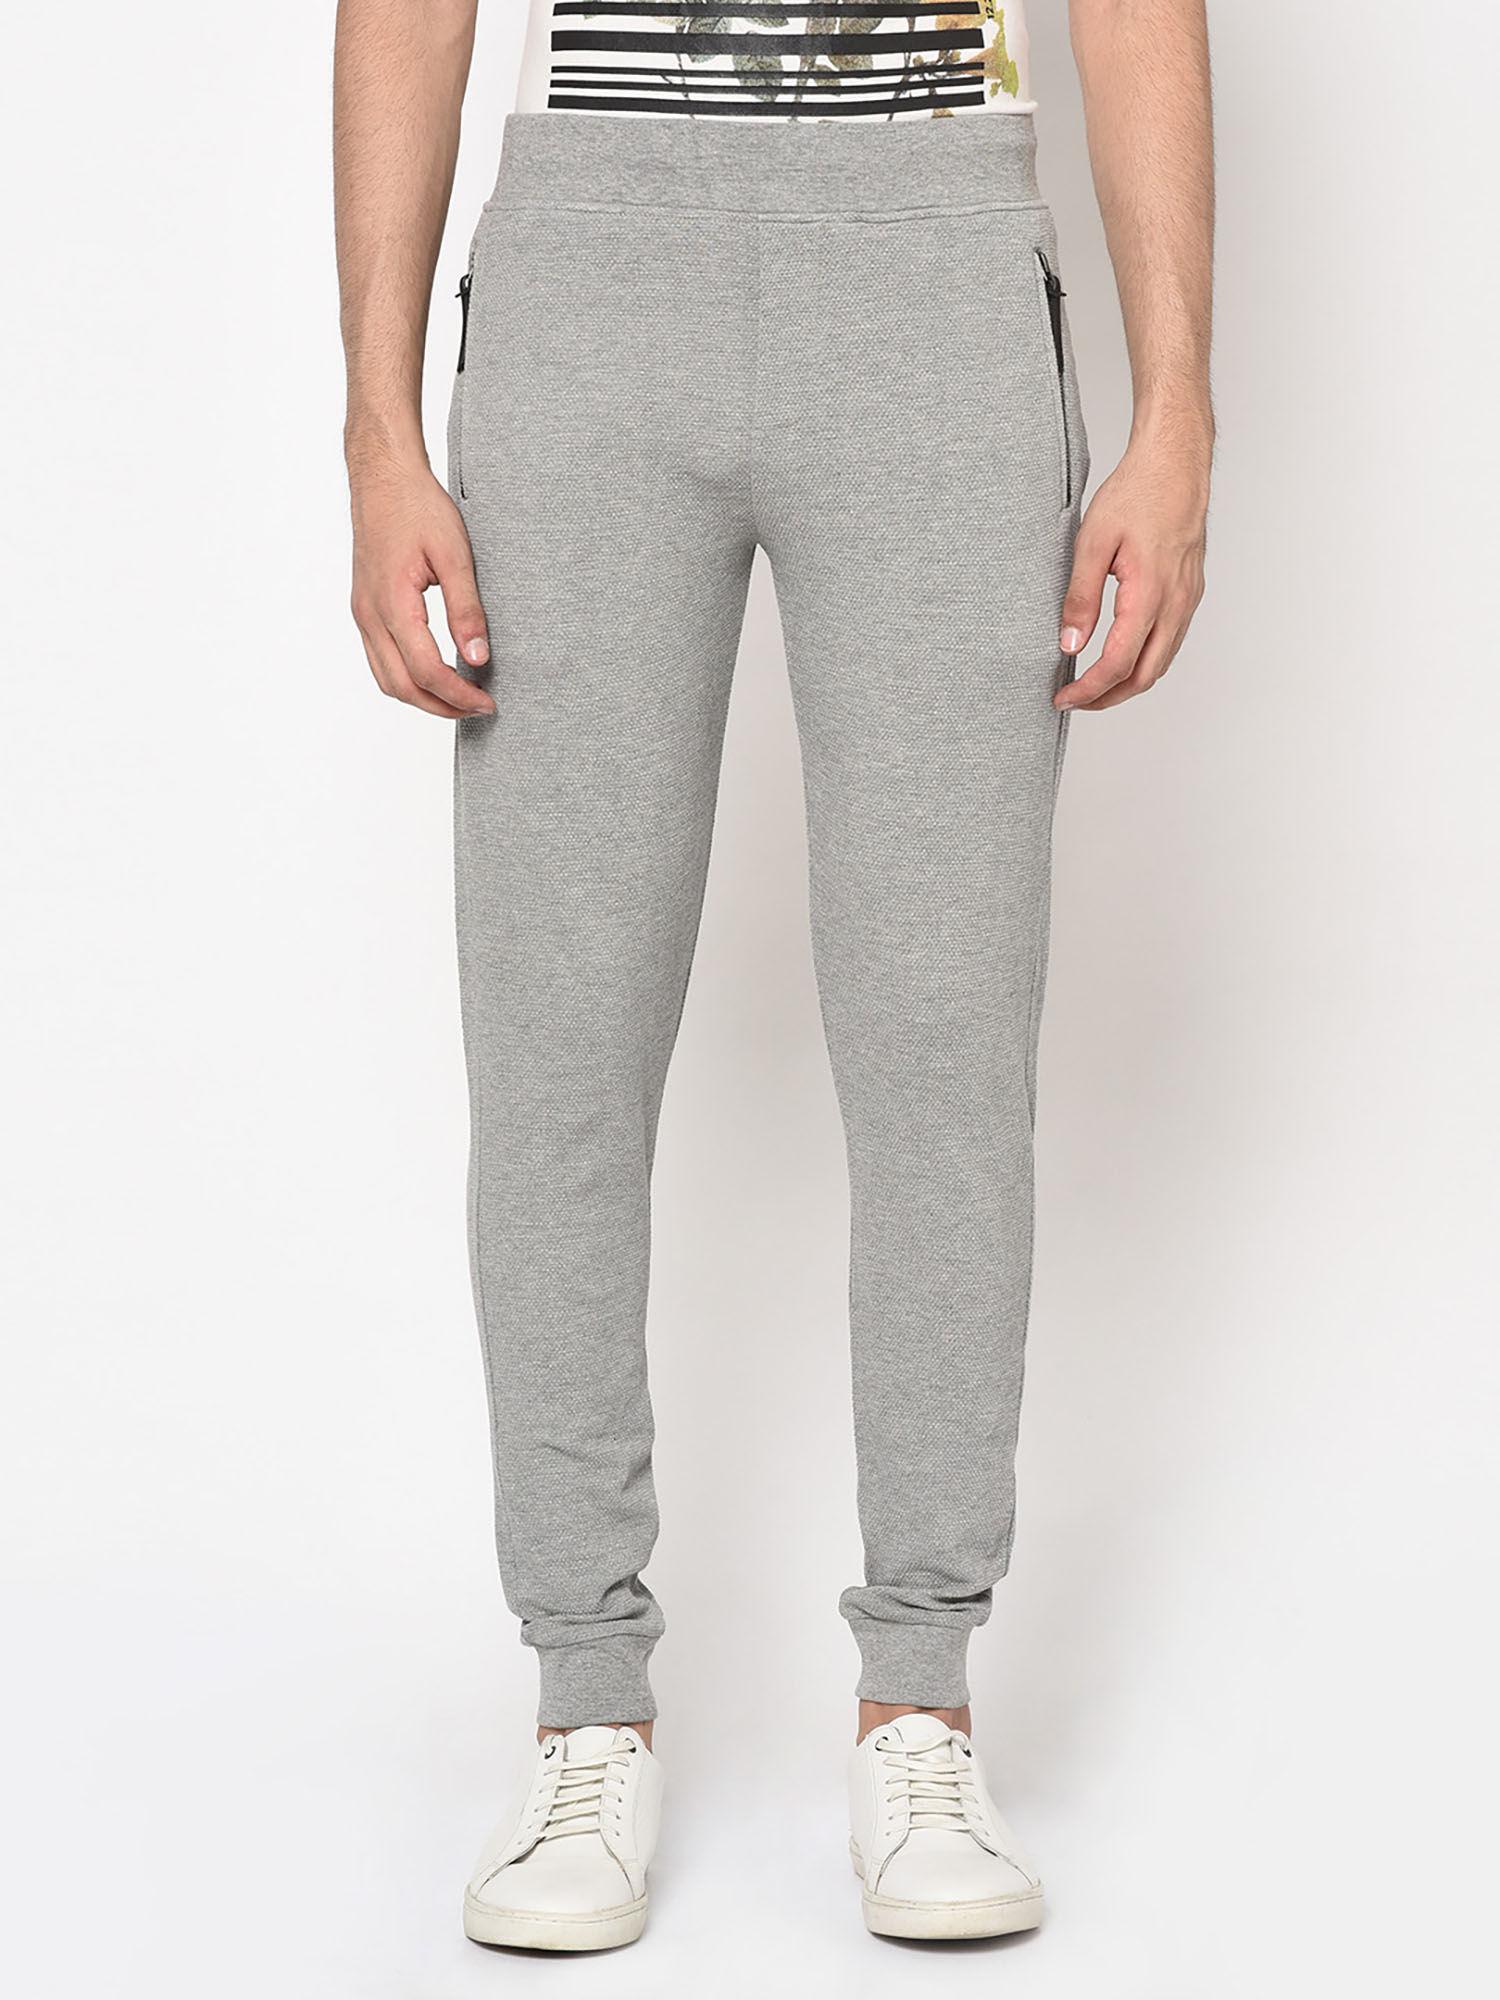 reflex casual khakis in grey